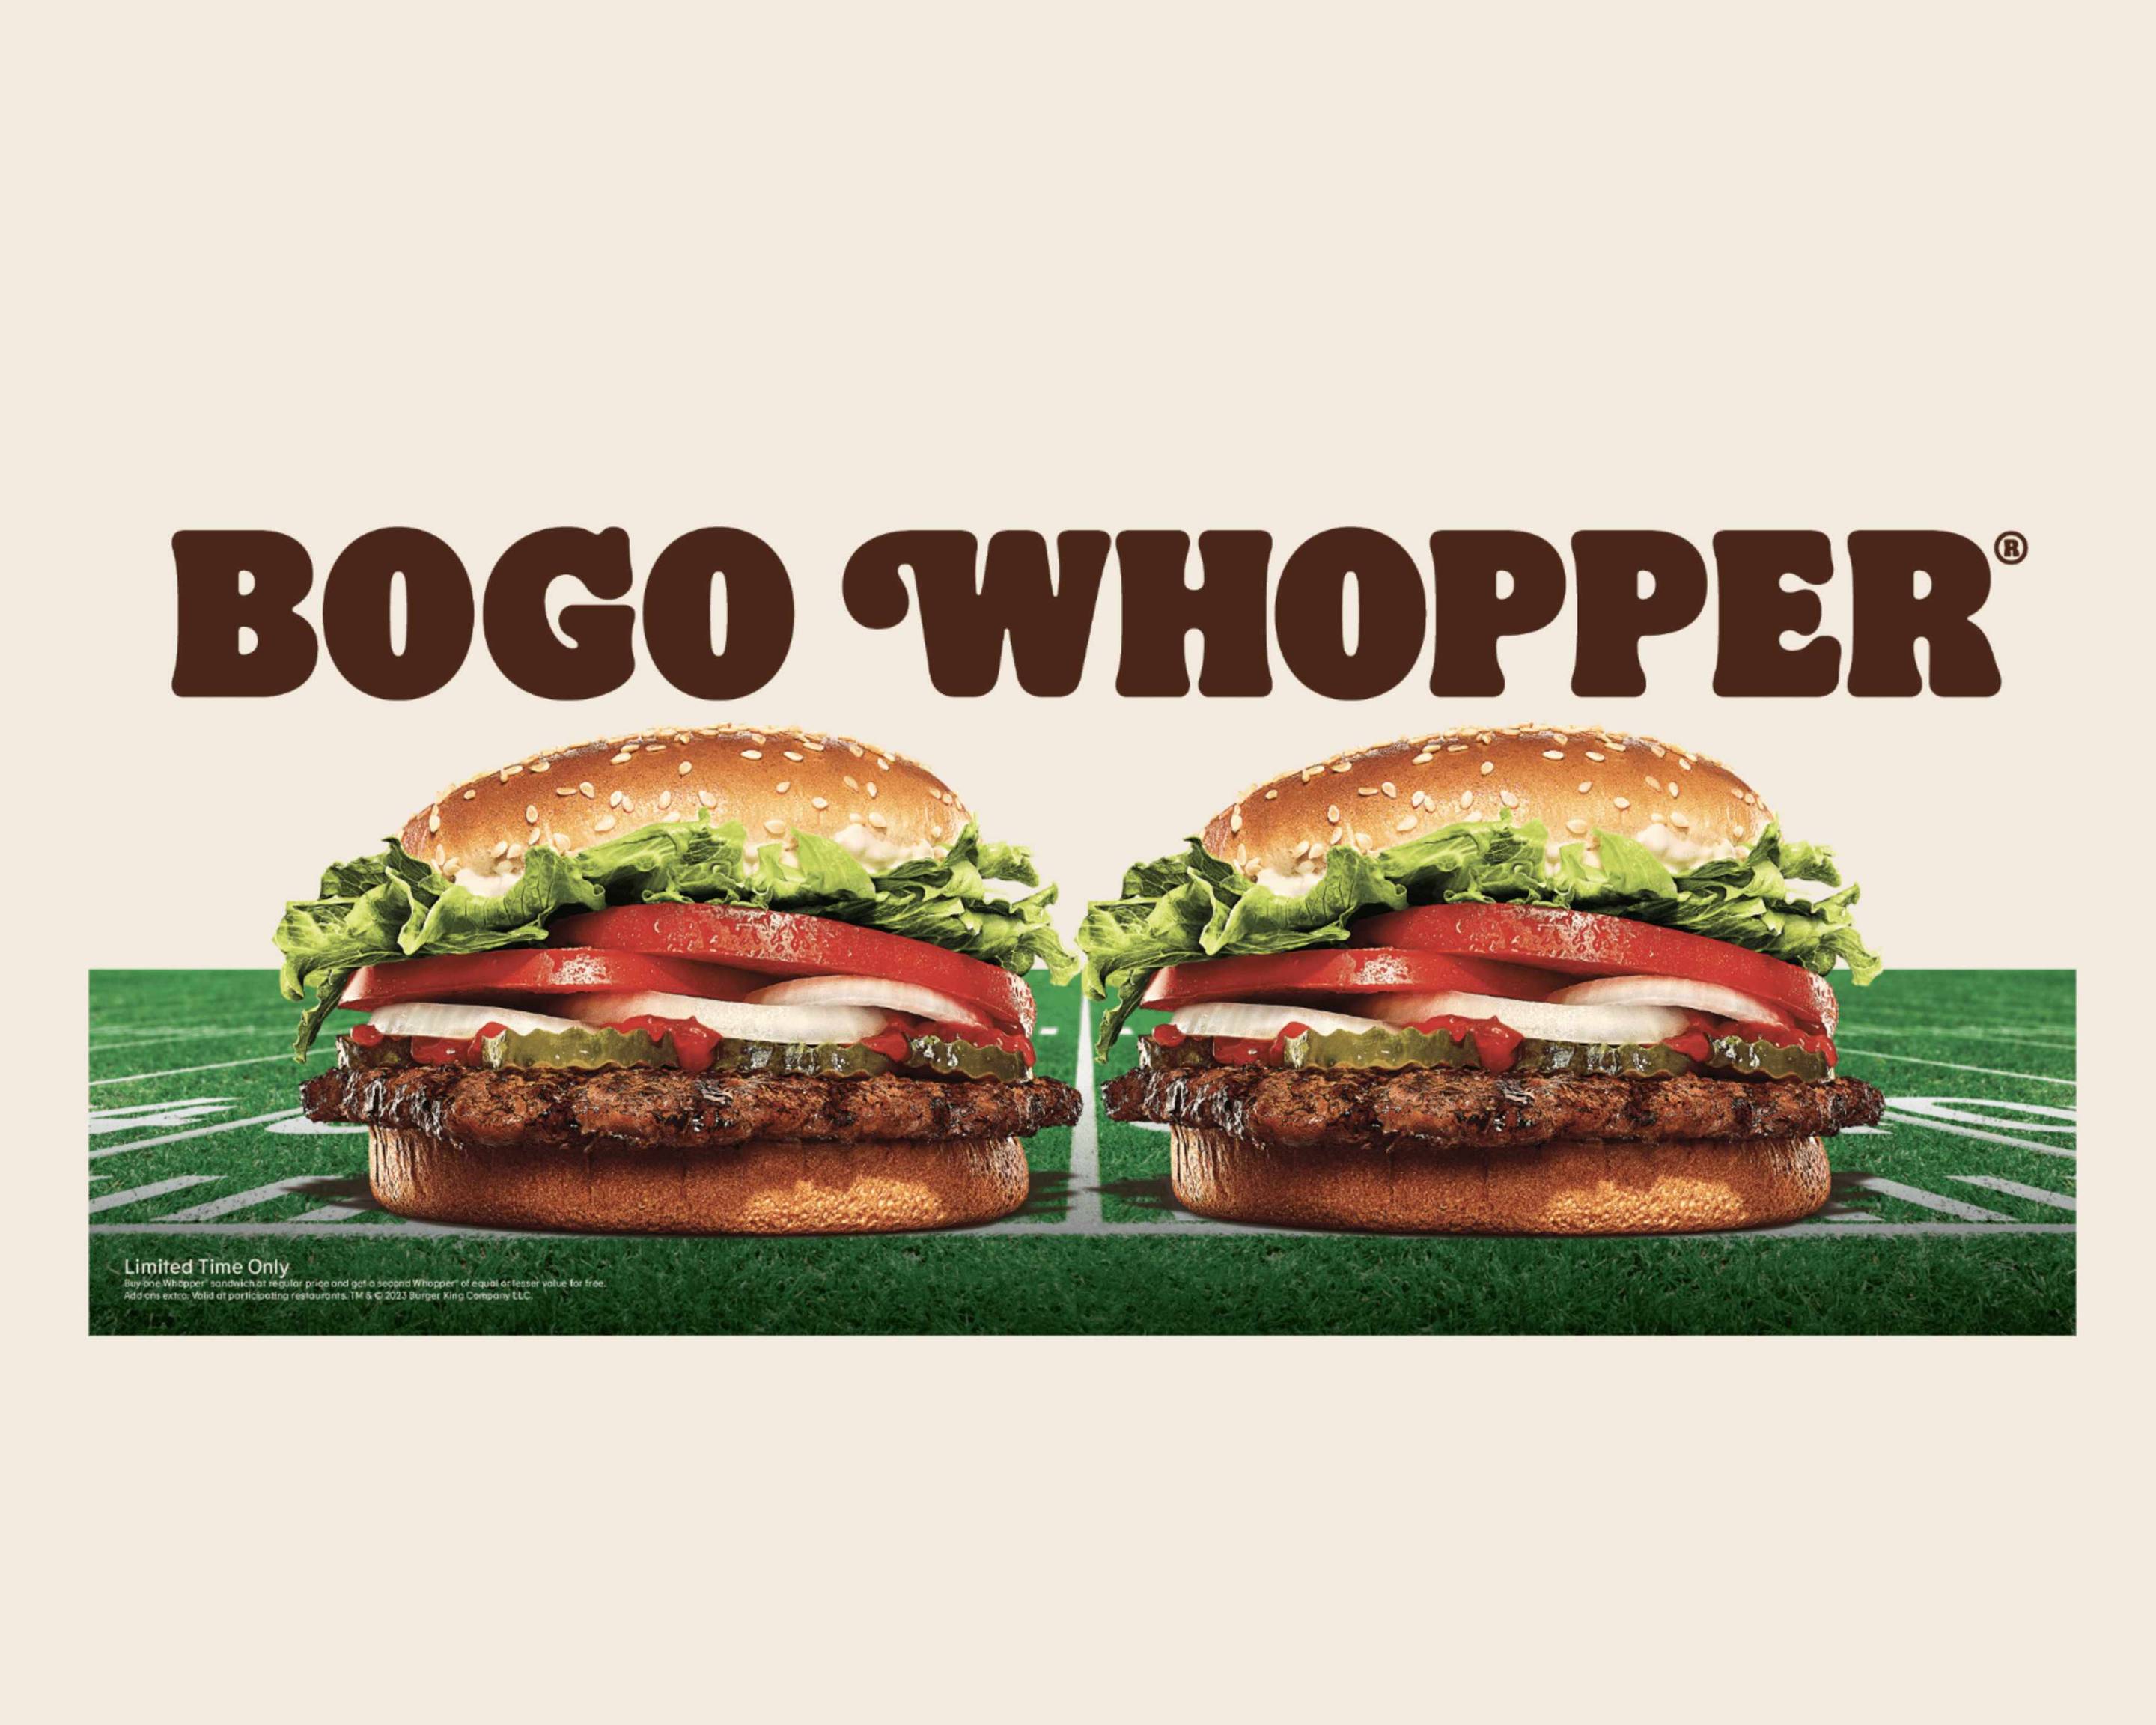 burger king double whopper